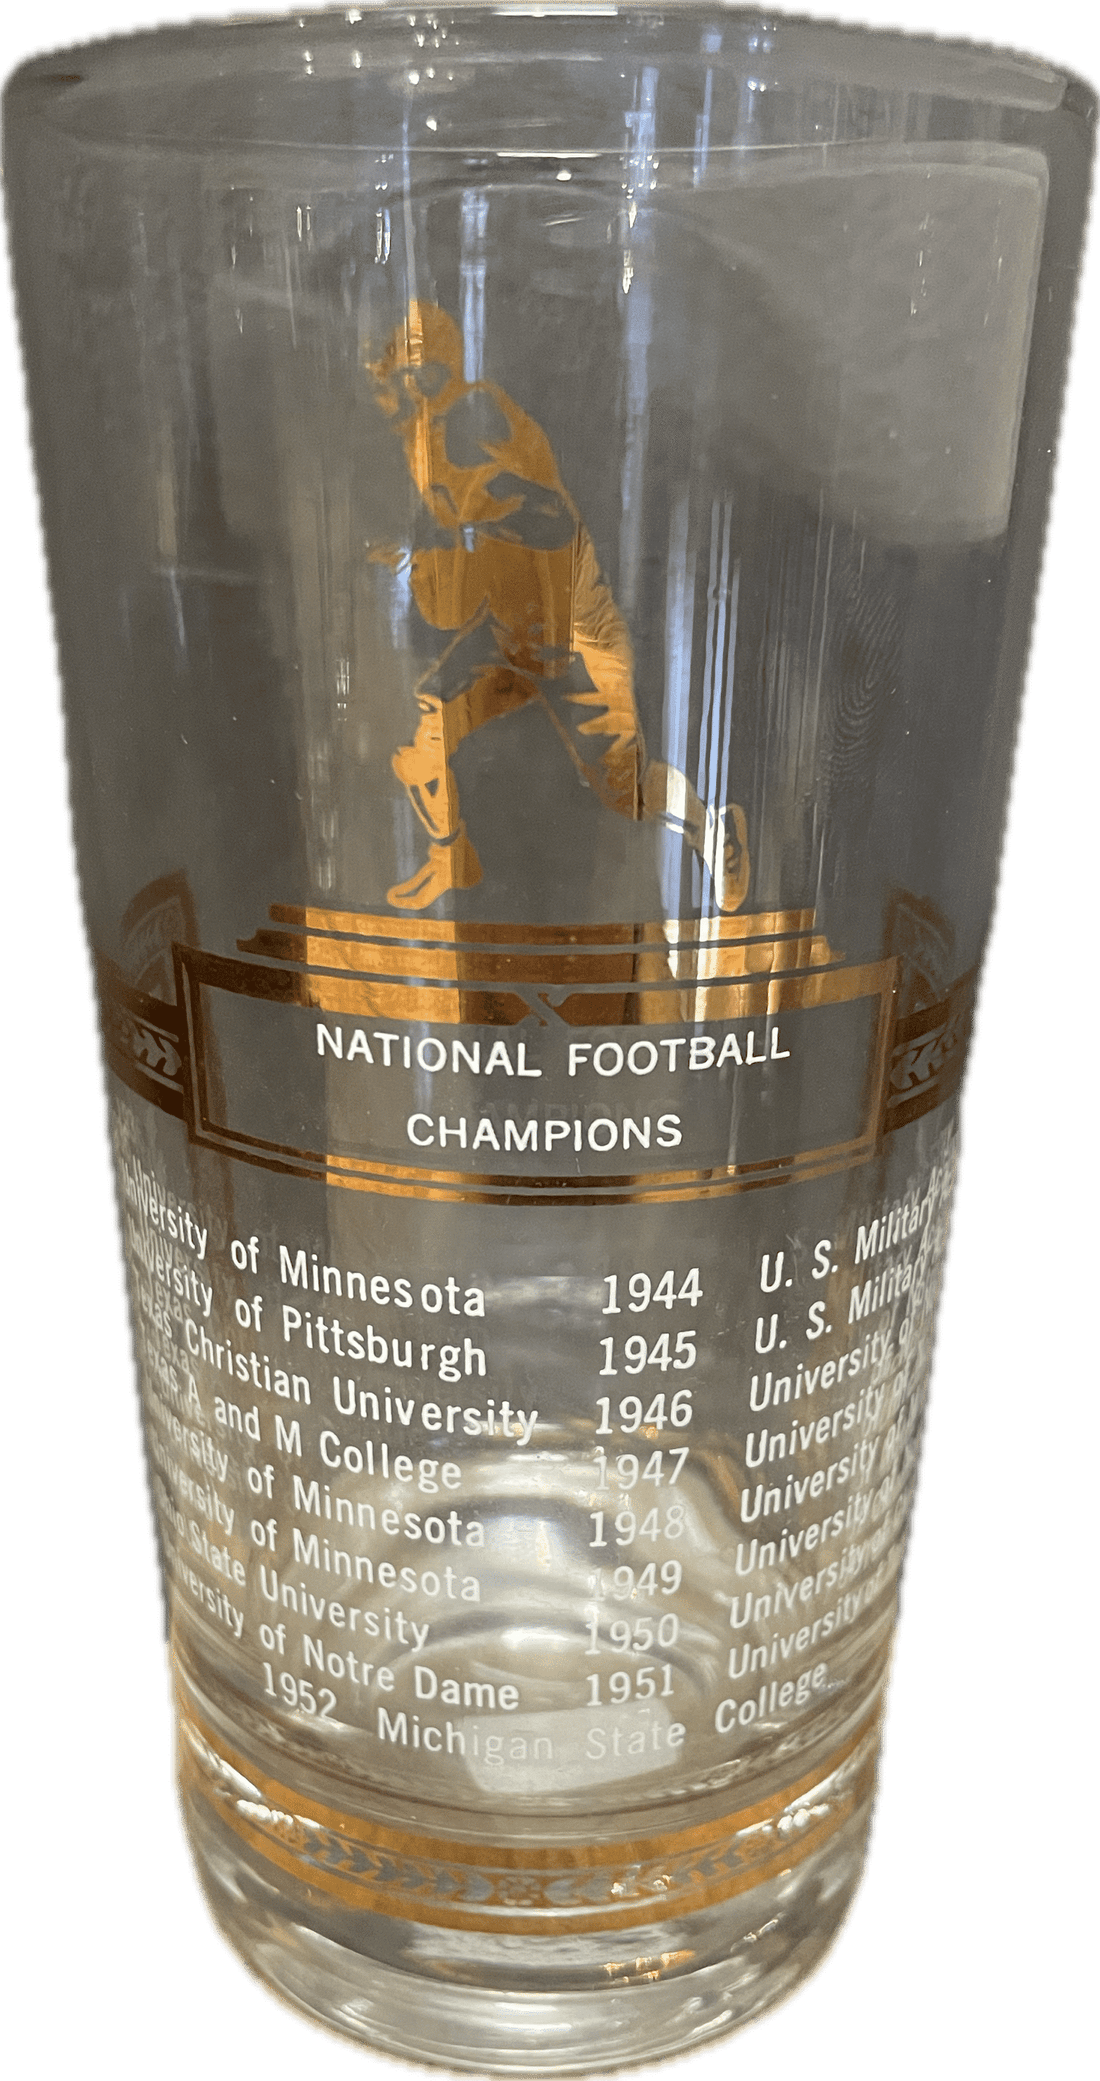 Vintage Sports Theme Glassware - National Football Champions